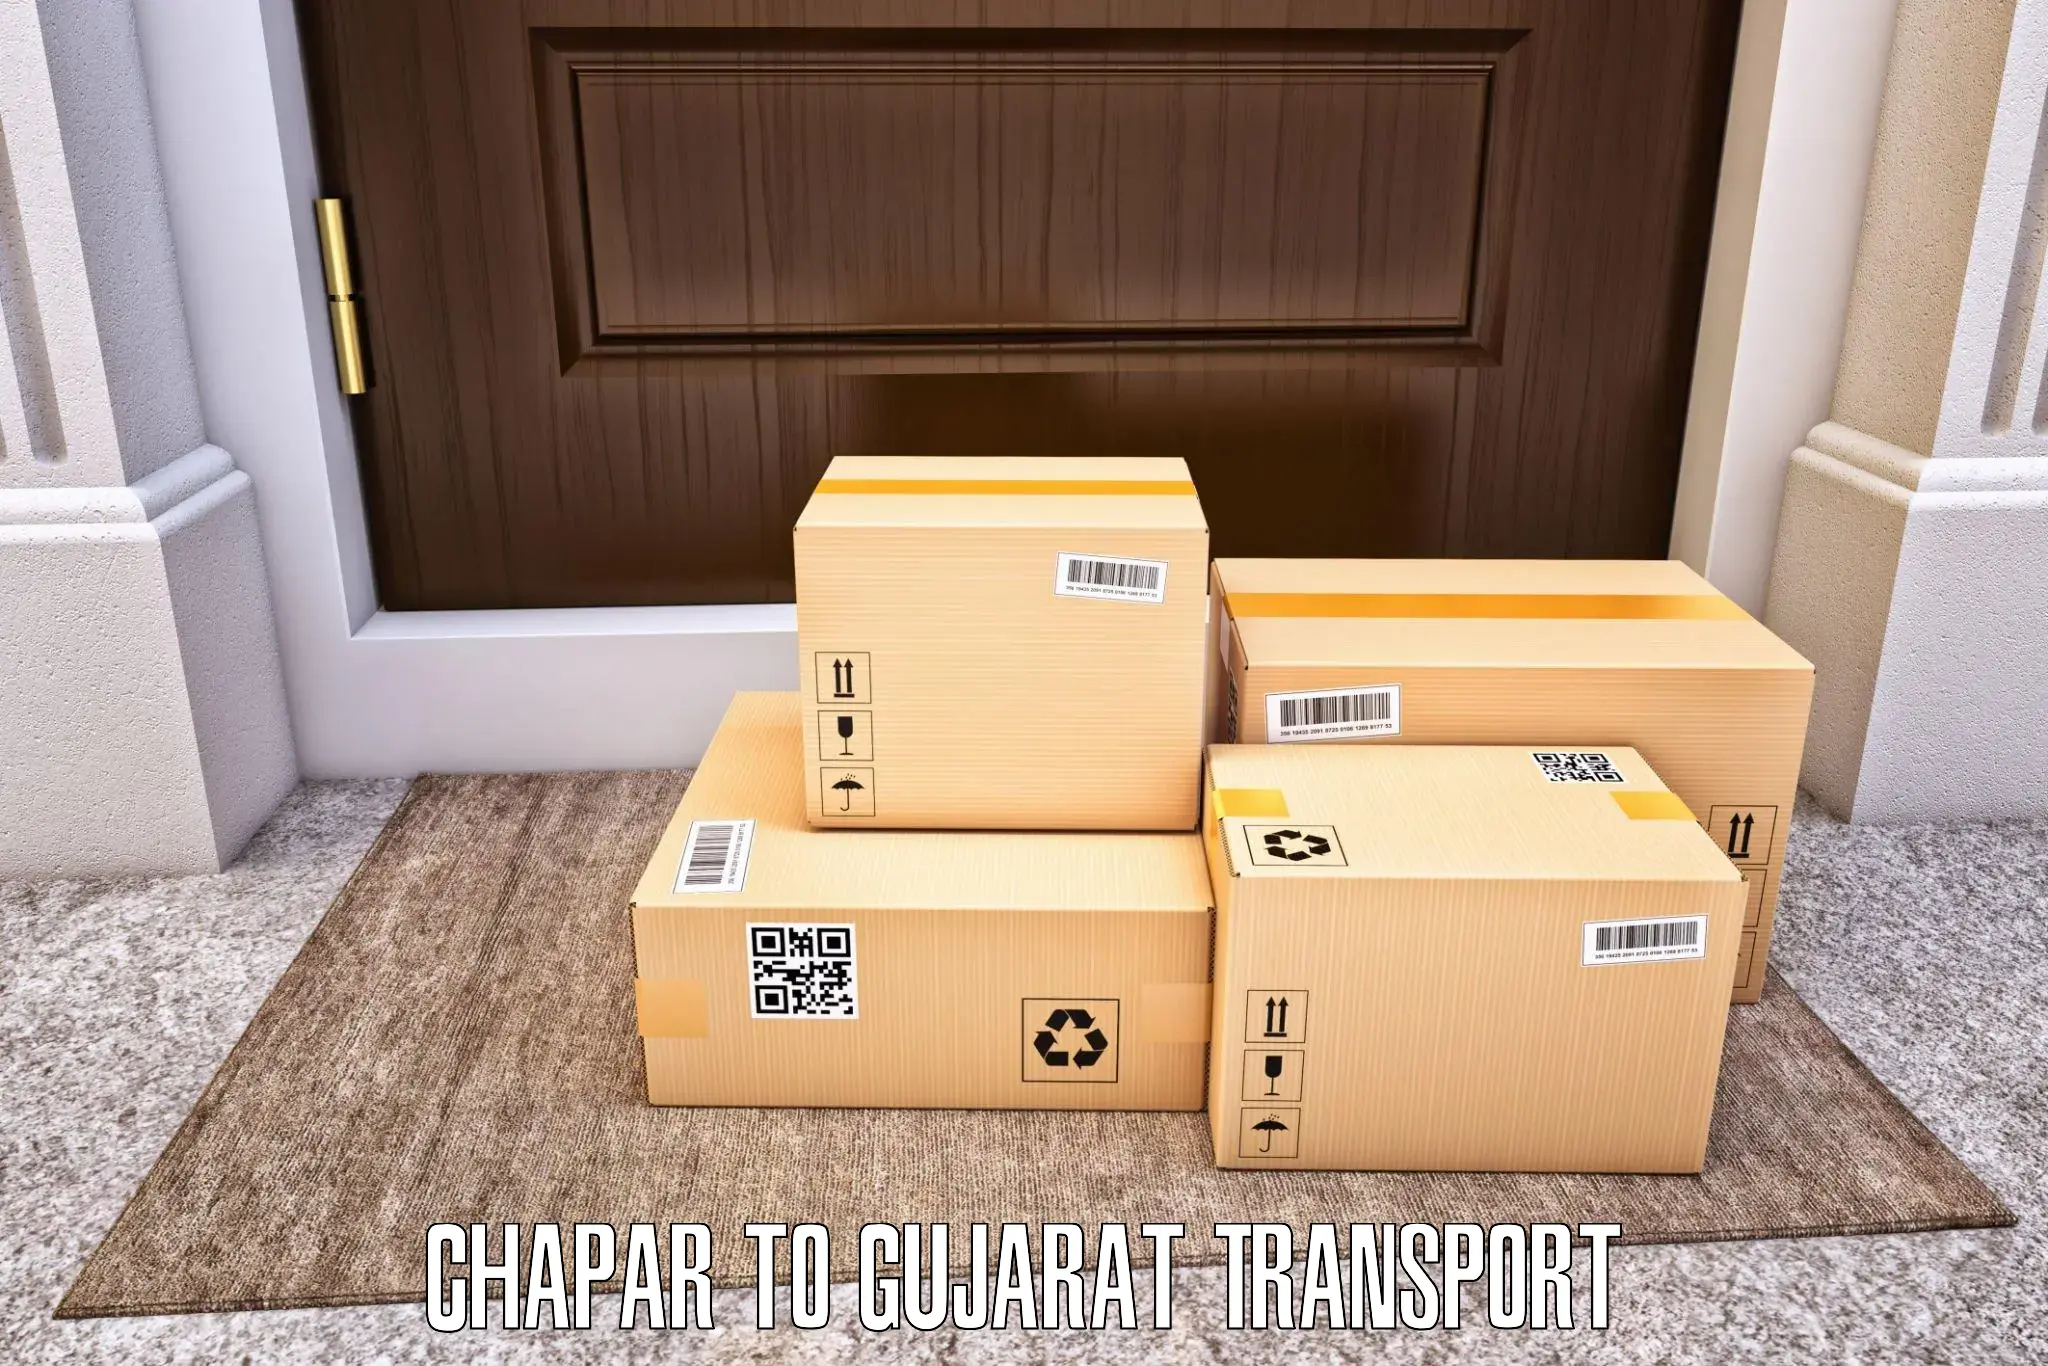 Container transport service Chapar to Upleta